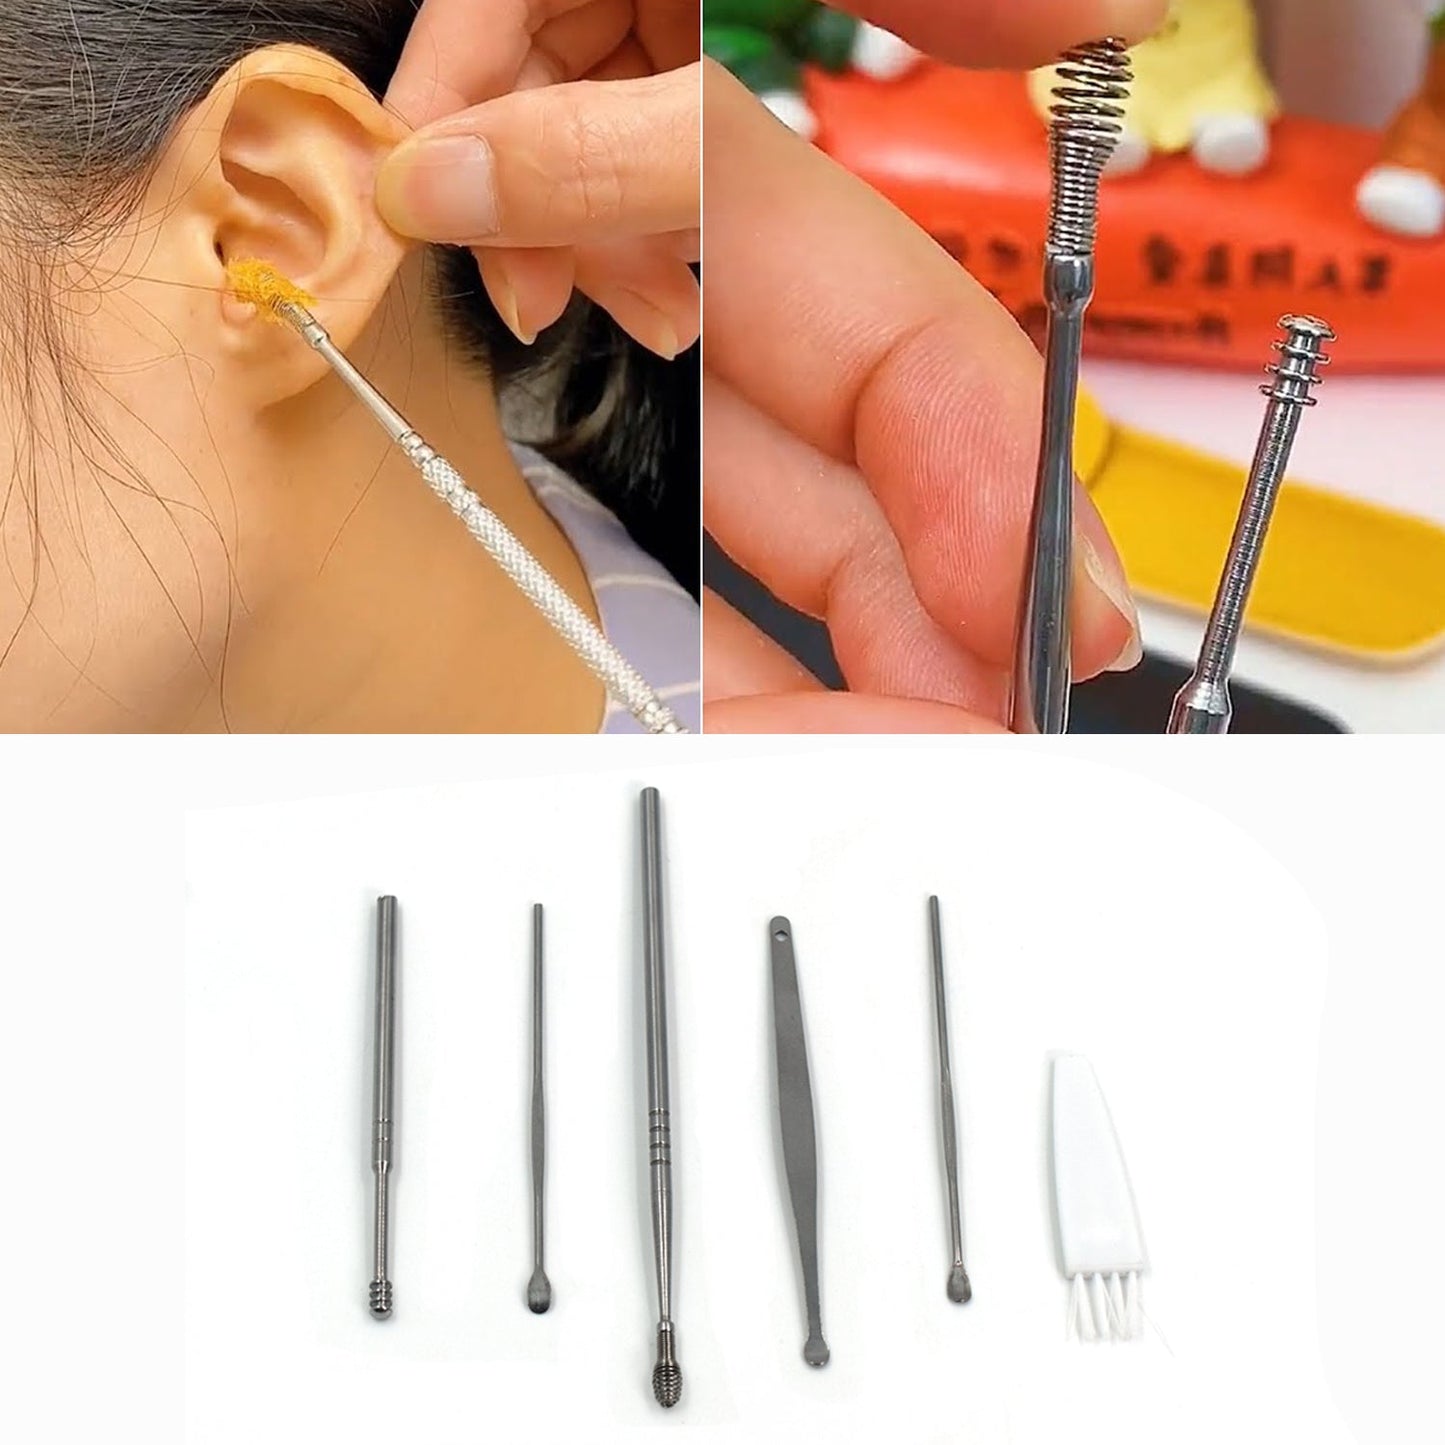 6314 6Pcs Earwax Removal Kit | Ear Cleansing Tool Set | Ear Curette Ear Wax Remover Tool DeoDap